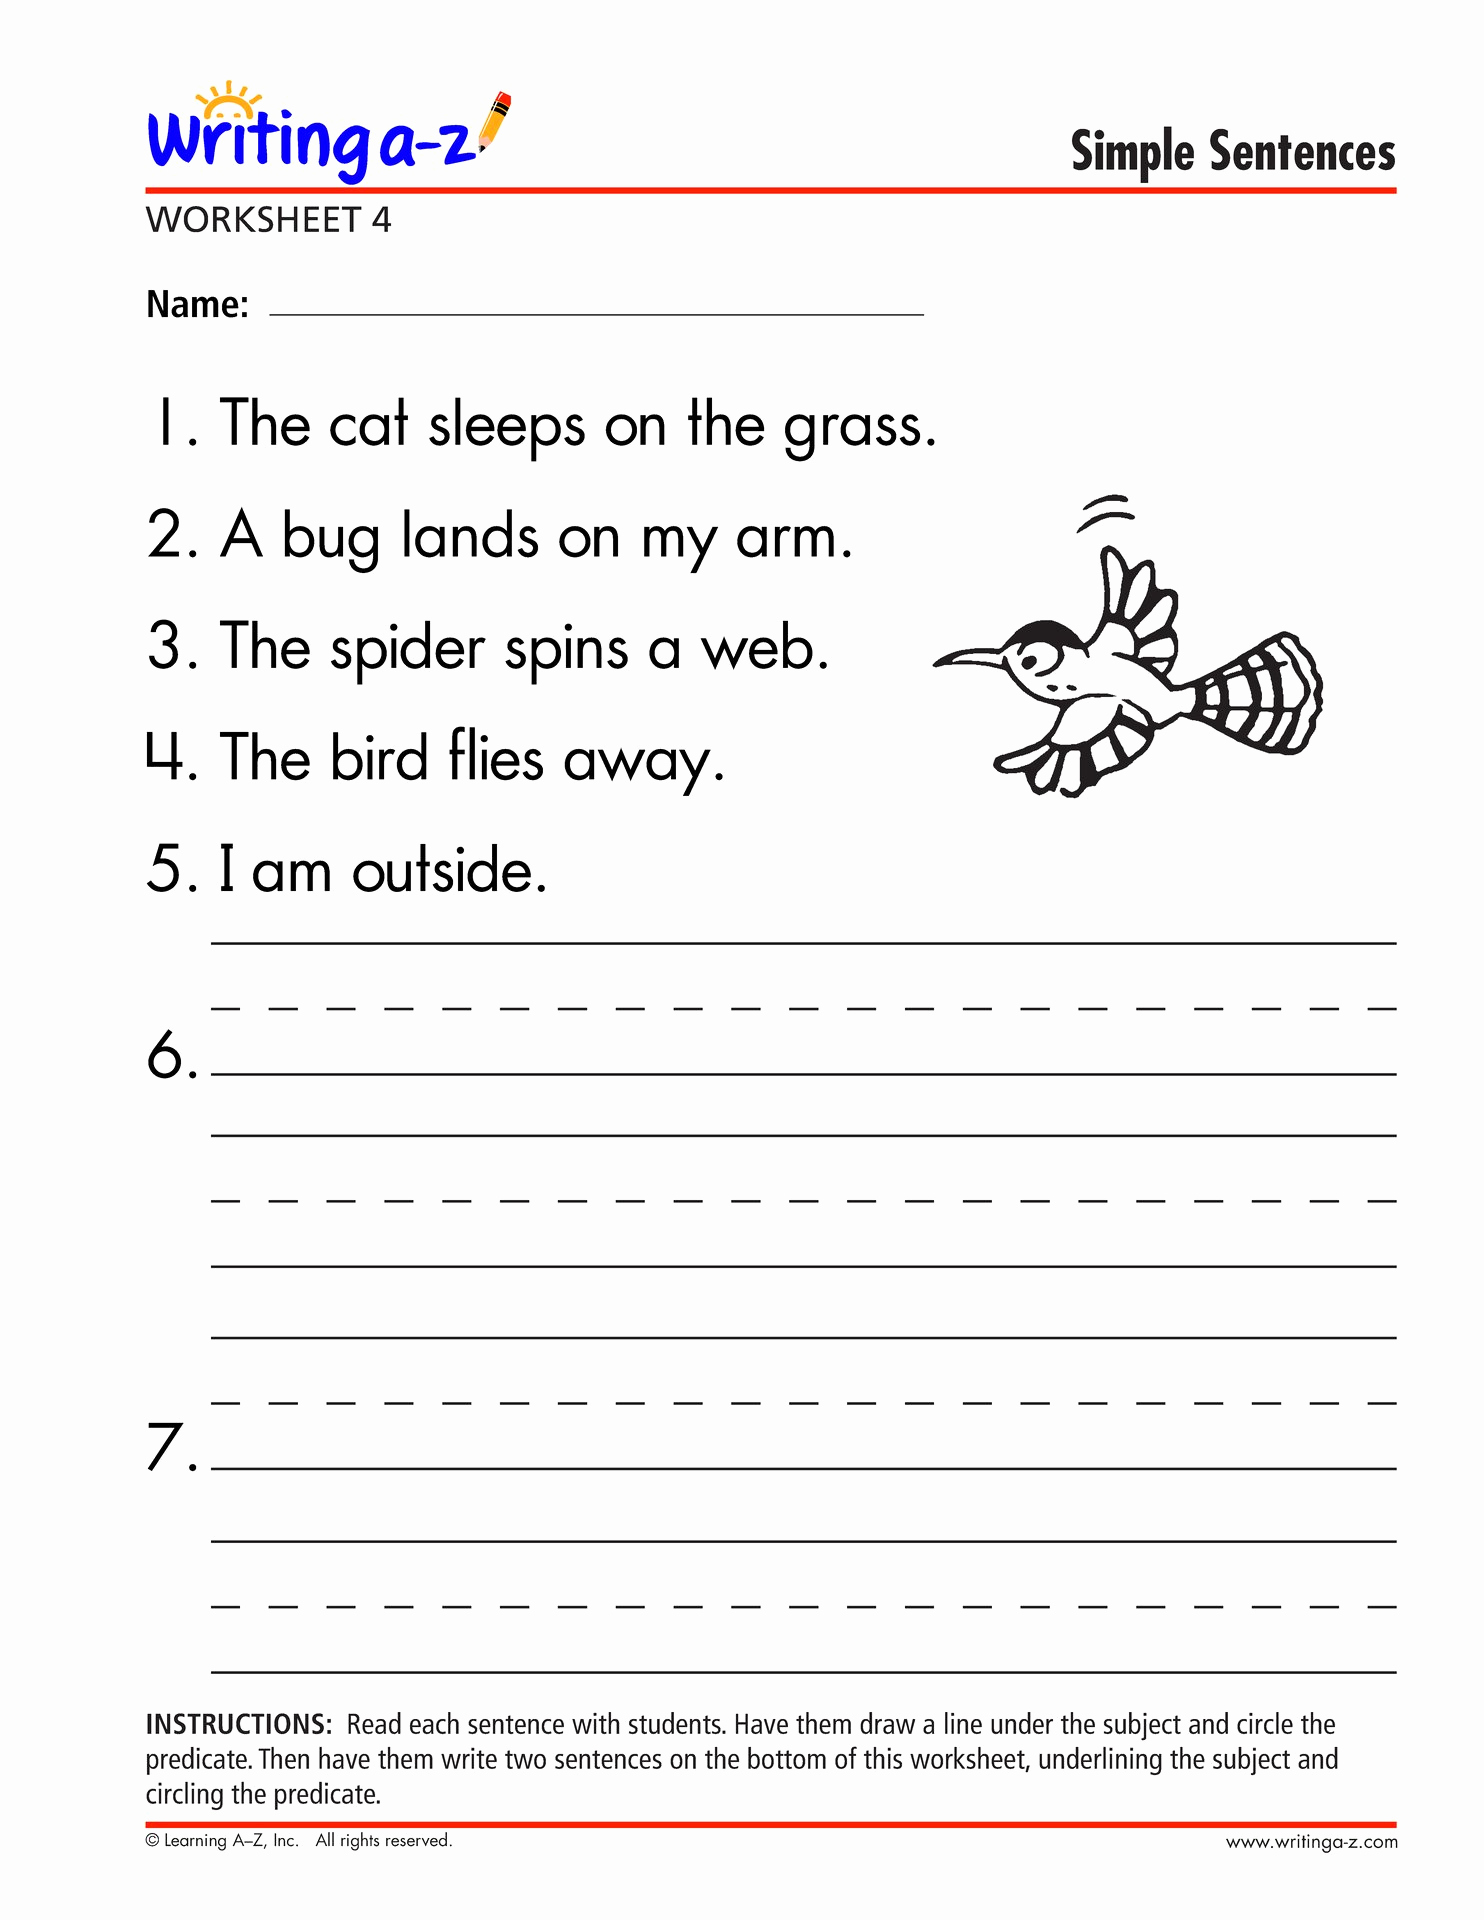 Writing Sentences Worksheets Lovely Basic Sentence Writing Worksheets